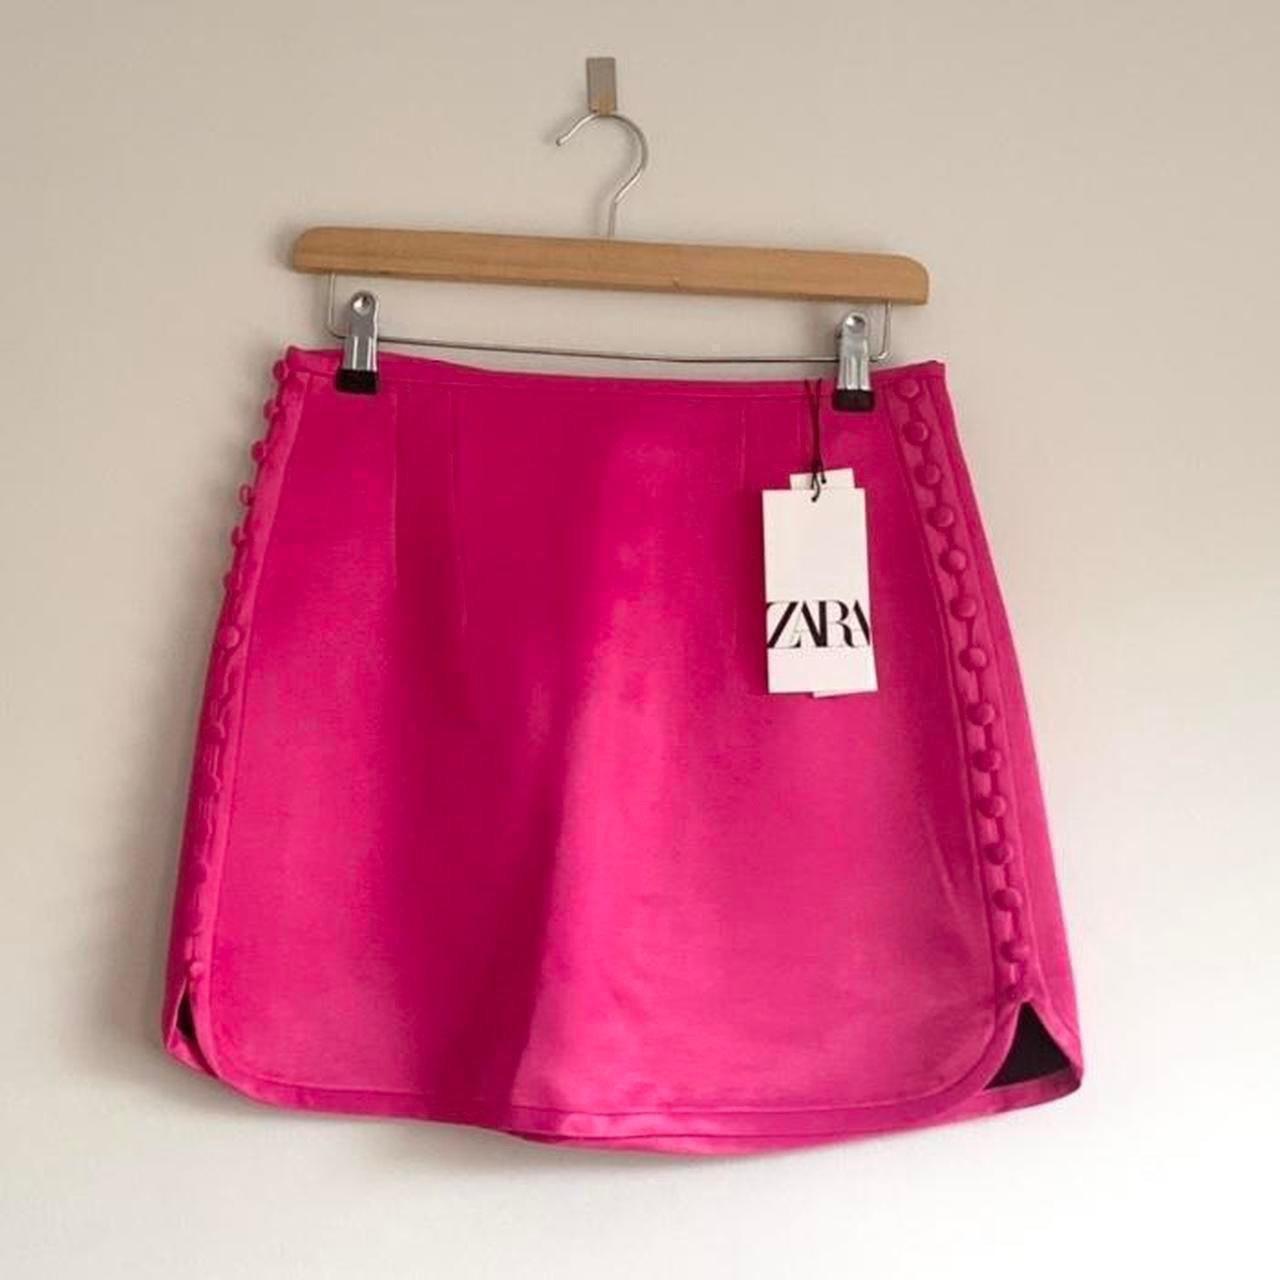 Zara Satin Finish Skirt With Buttons Depop 